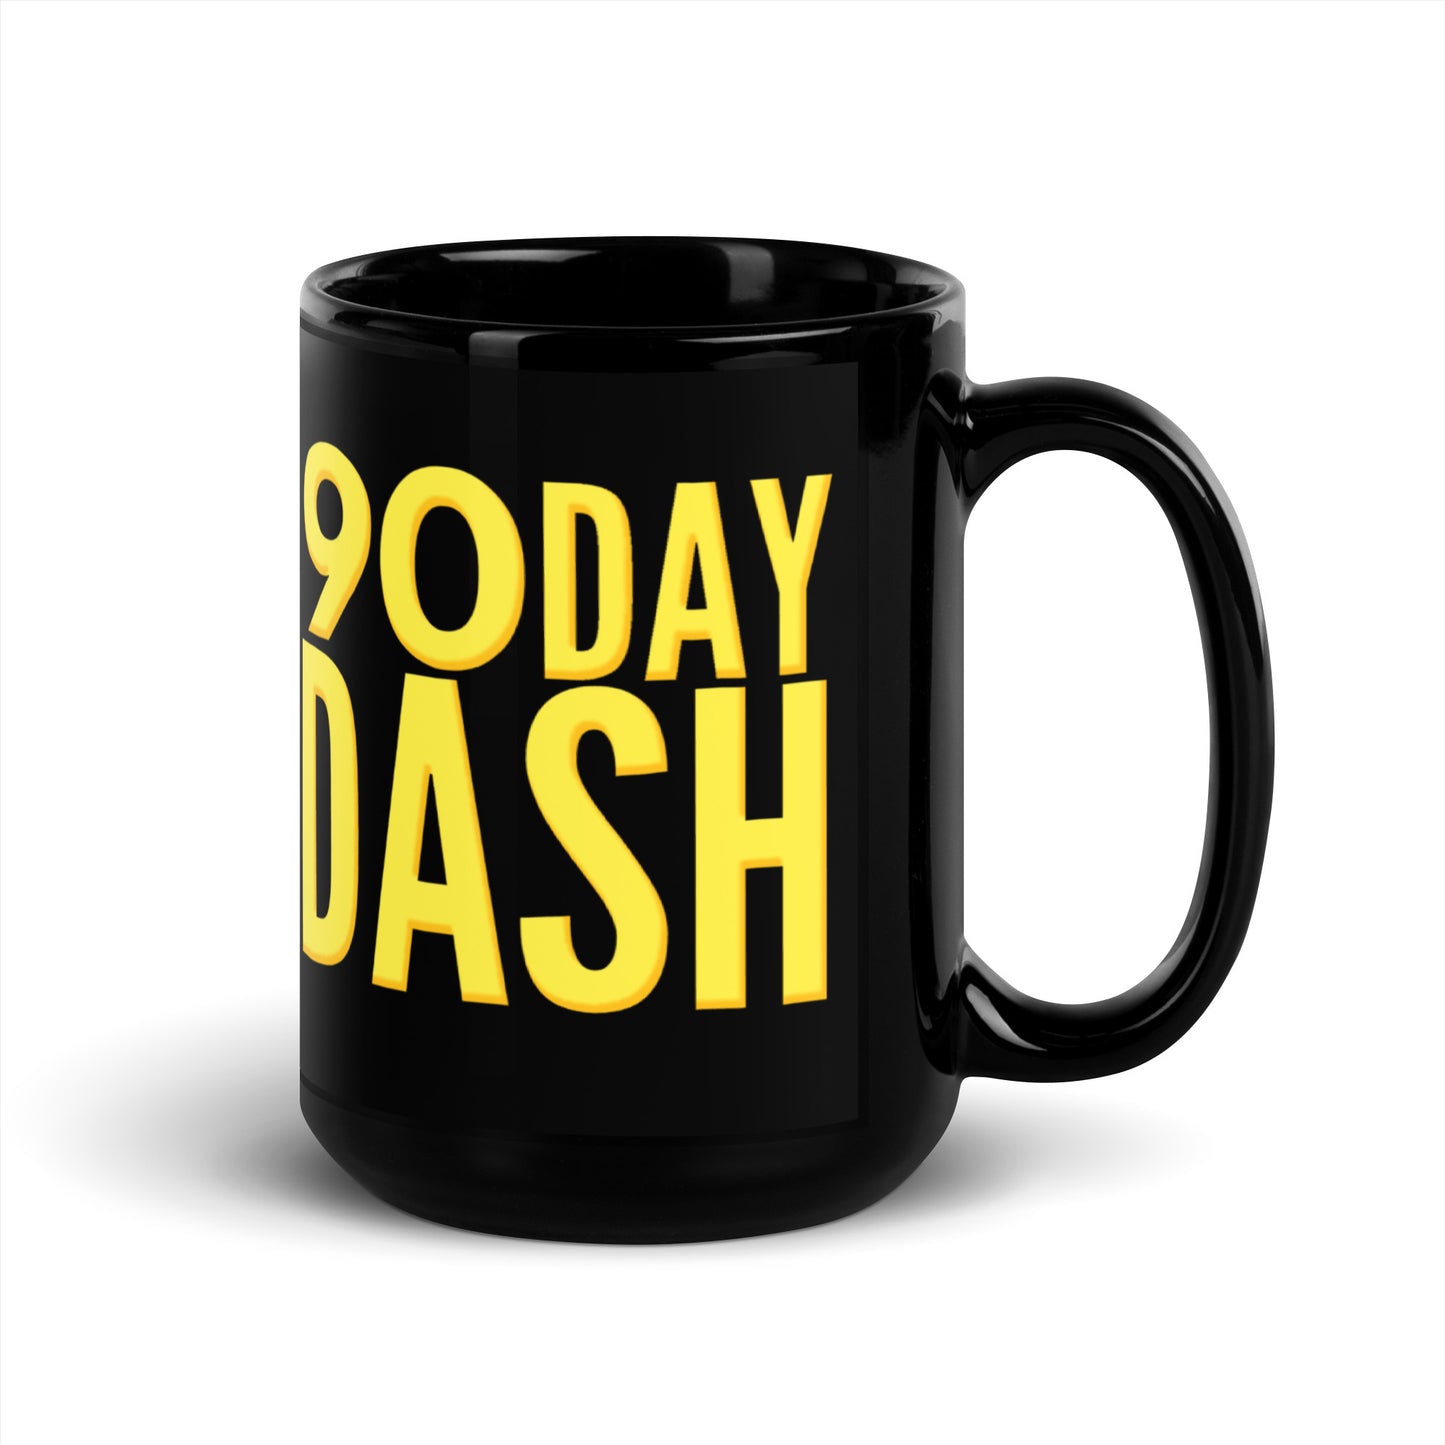 90 Day Dash Mug